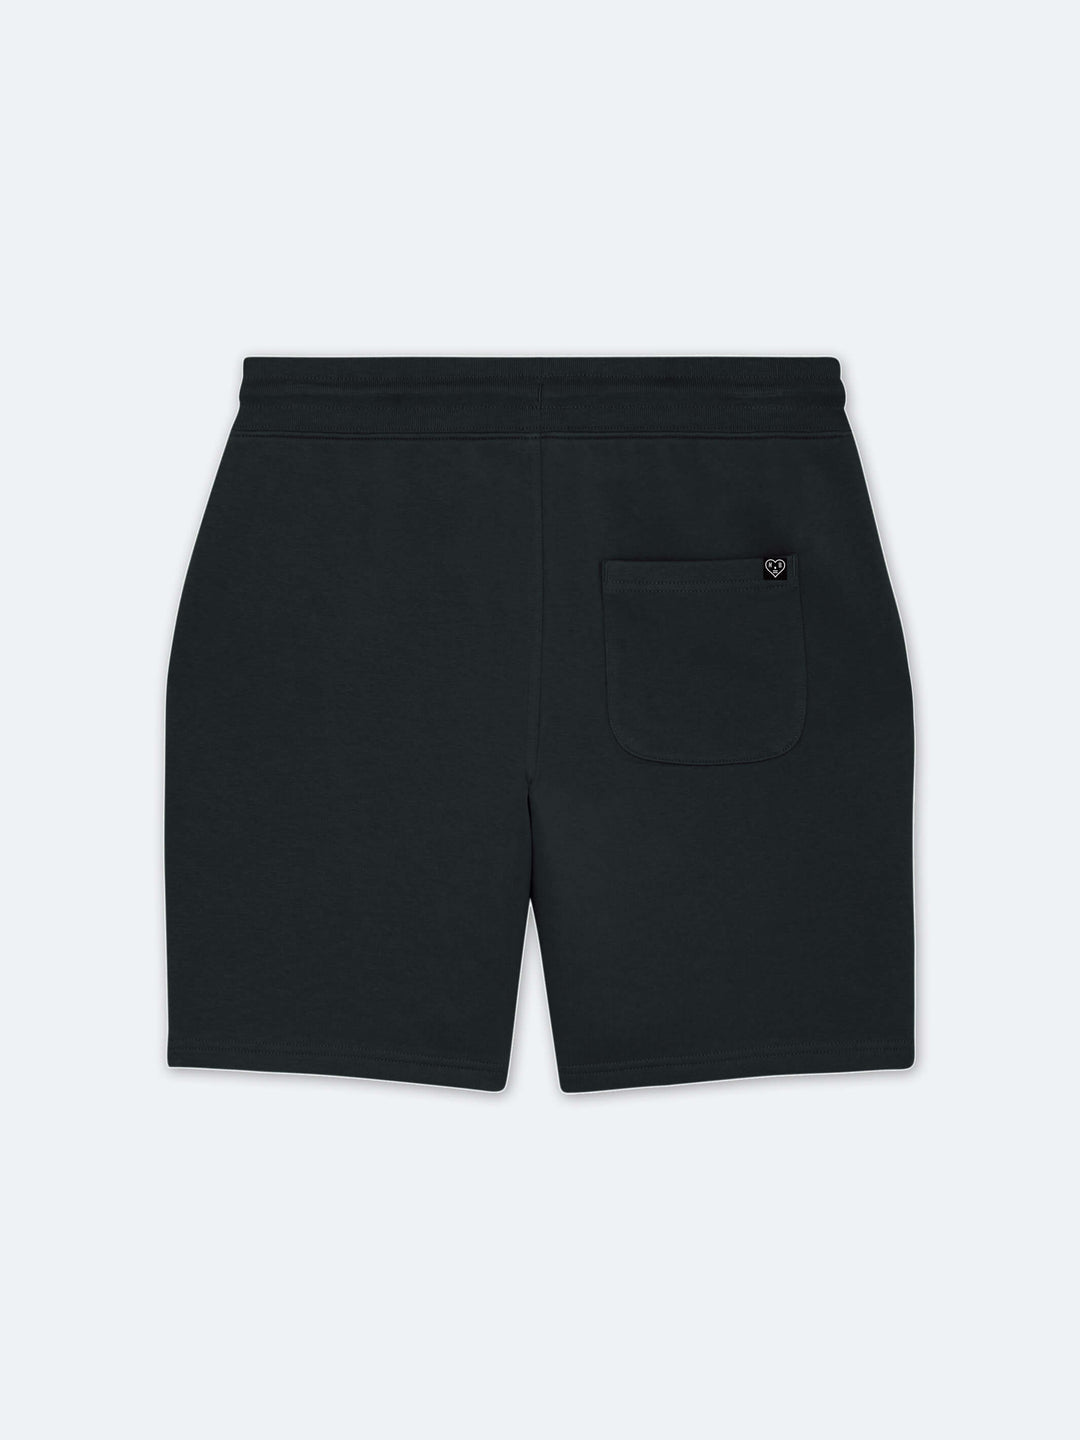 Stencil Shorts (Black)